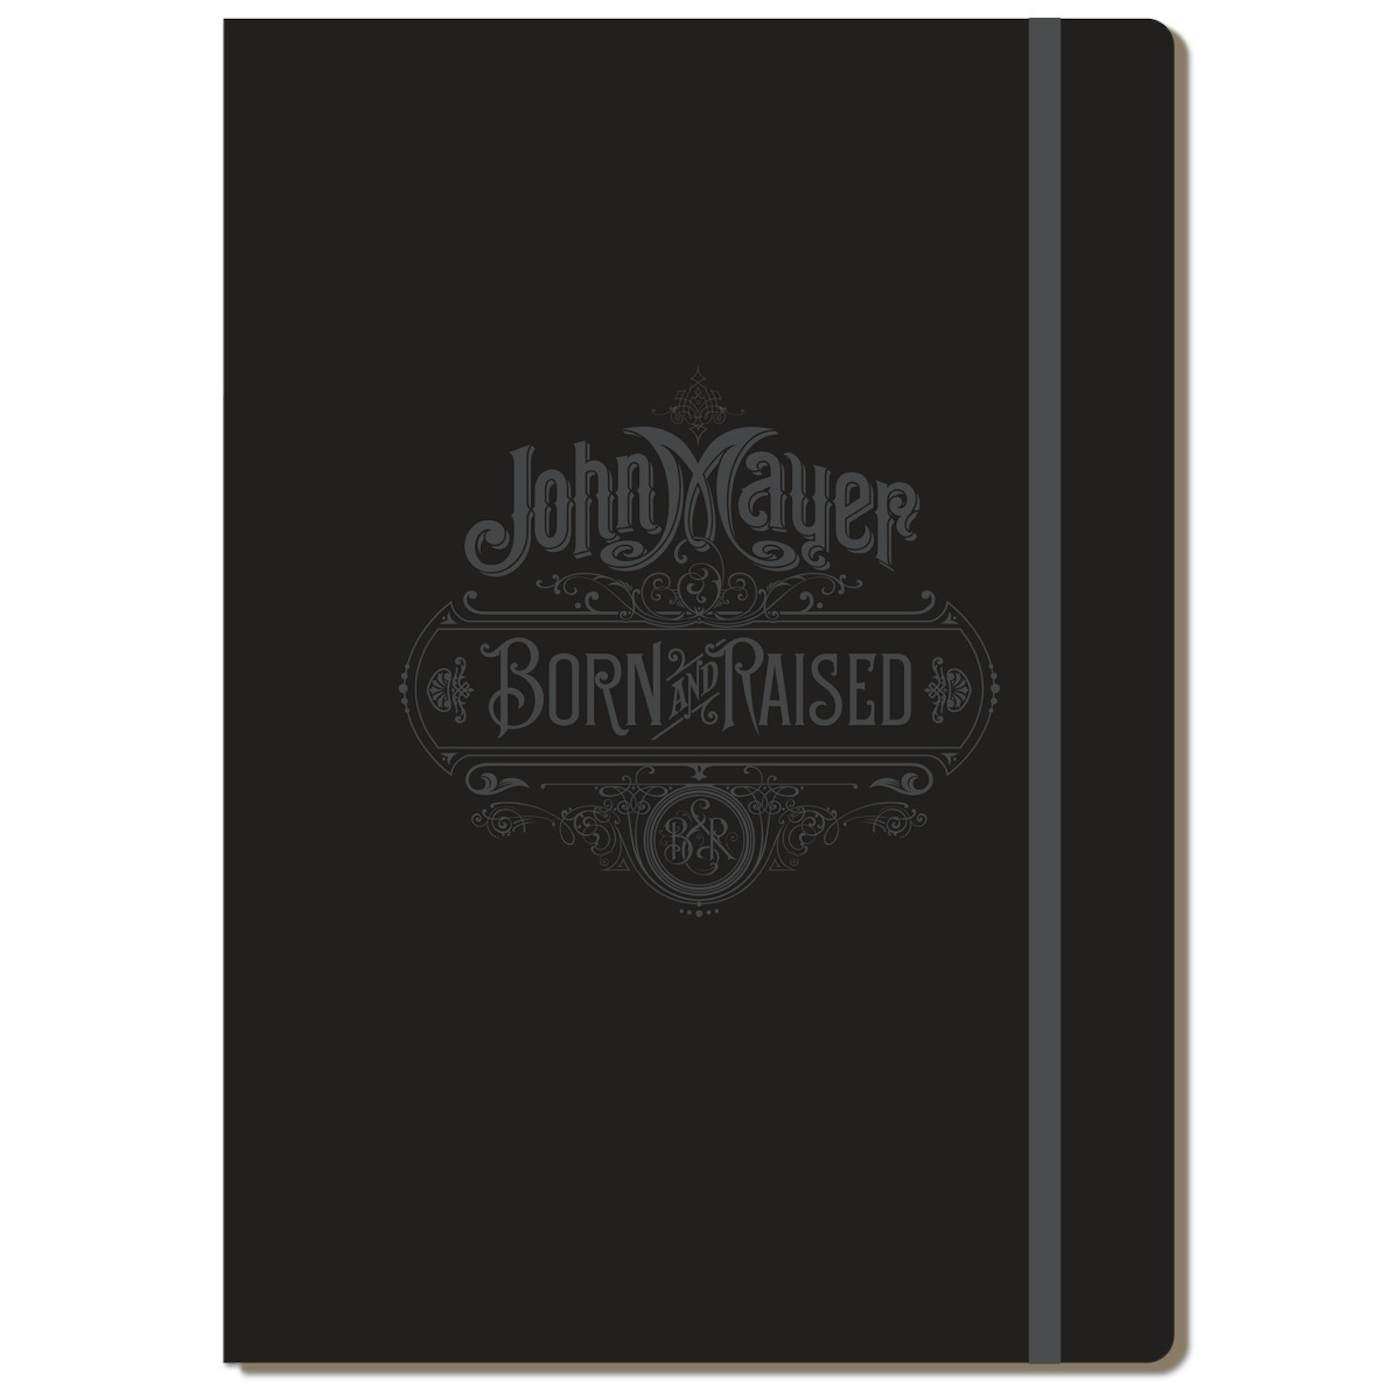 John Mayer Born and Raised A4 Folio Notebook by Moleskine